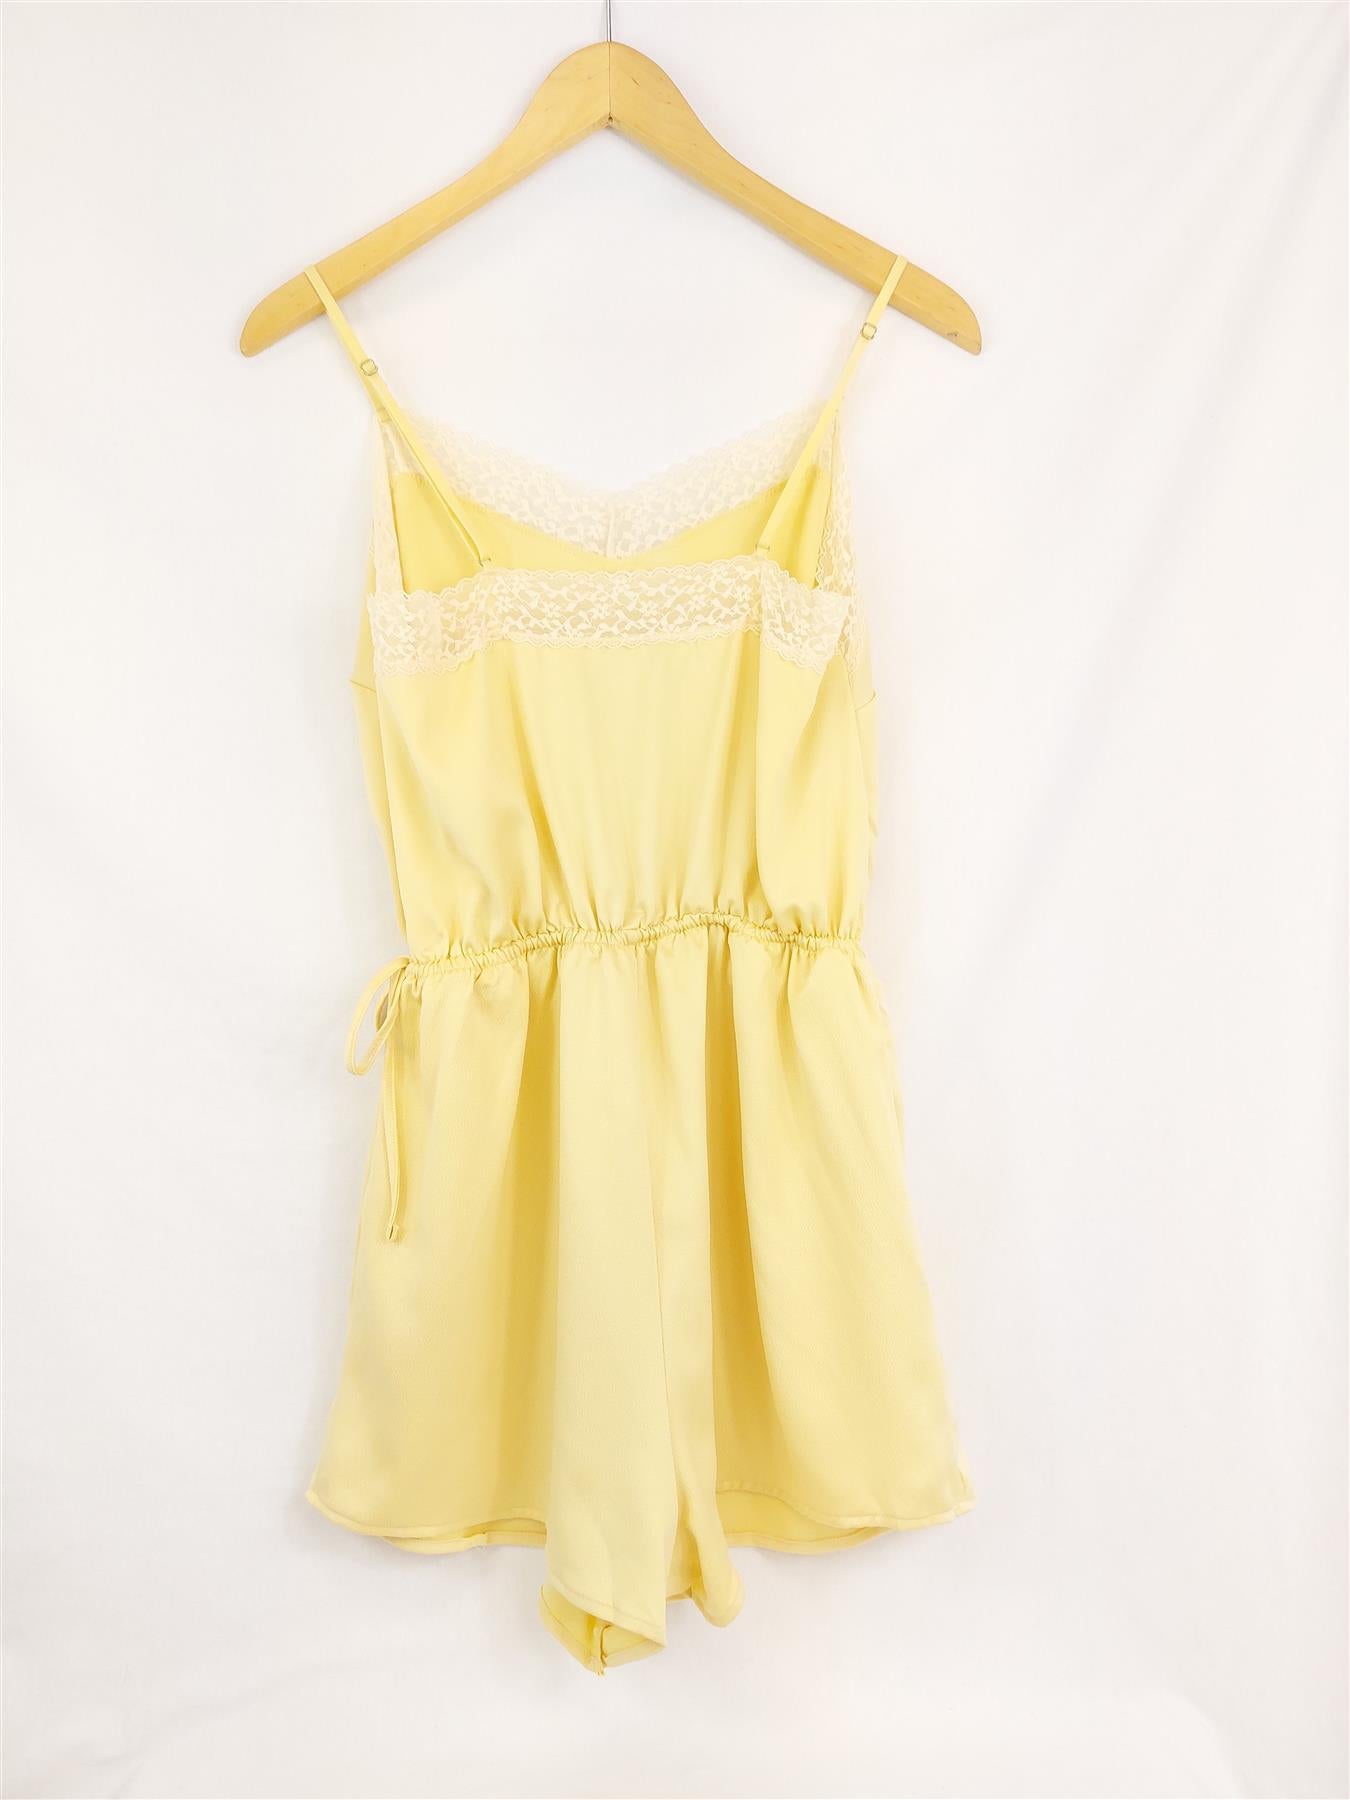 Women's Supersoft Yellow Teddy Bodysuit Sleepwear Pyjamas Floral Lace Trim